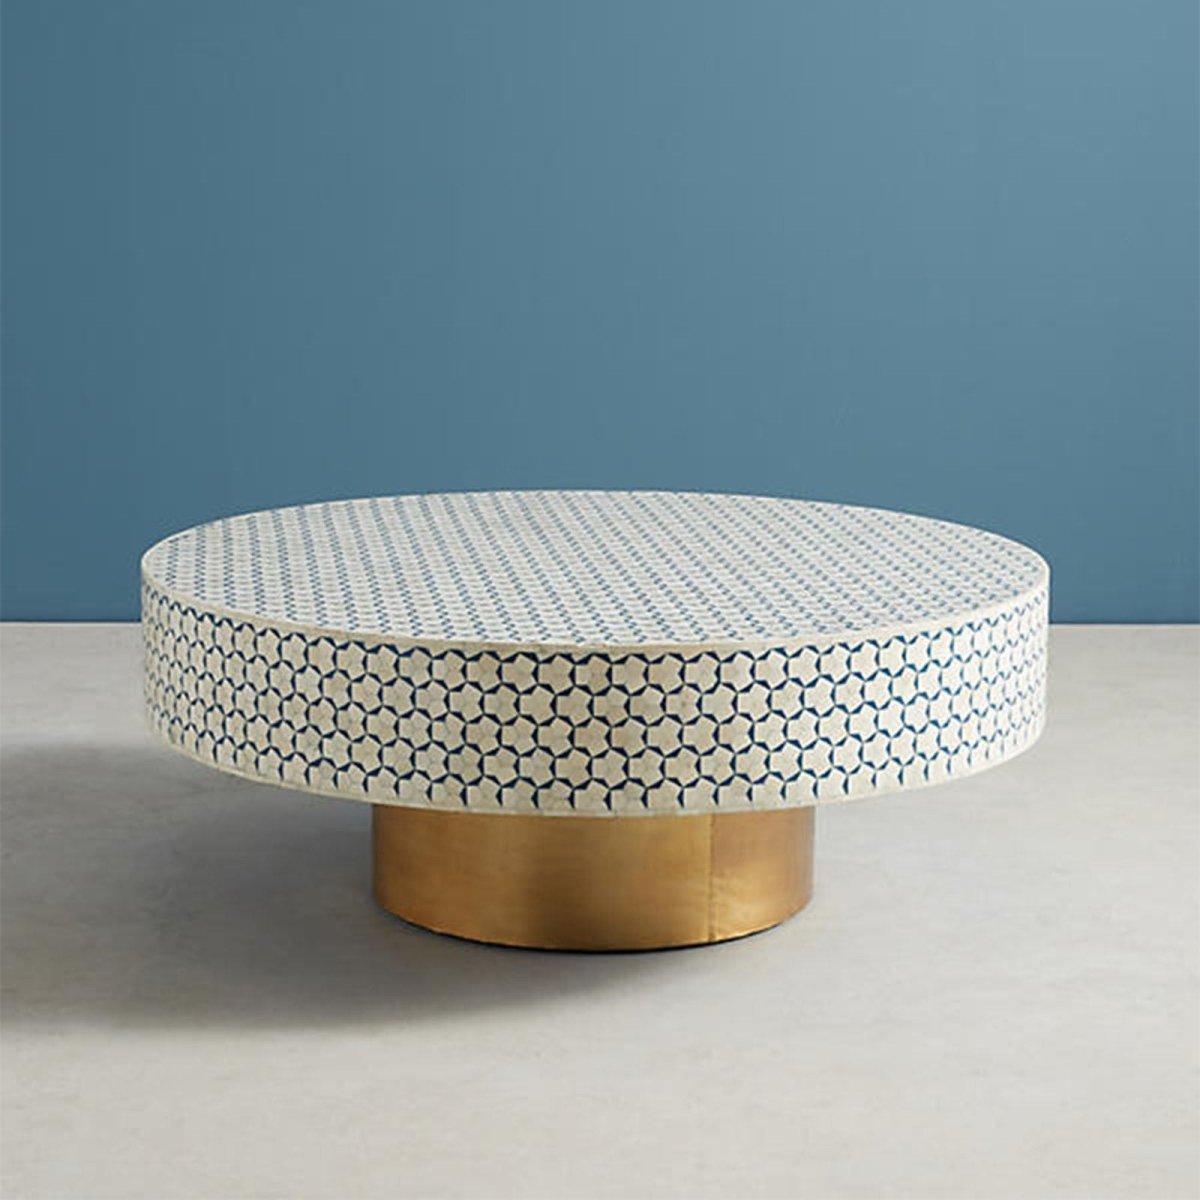 Handmade Bone Inlay Coffee Table In Blue & White Color | Center Table Coffee Table - Bone Inlay Furnitures